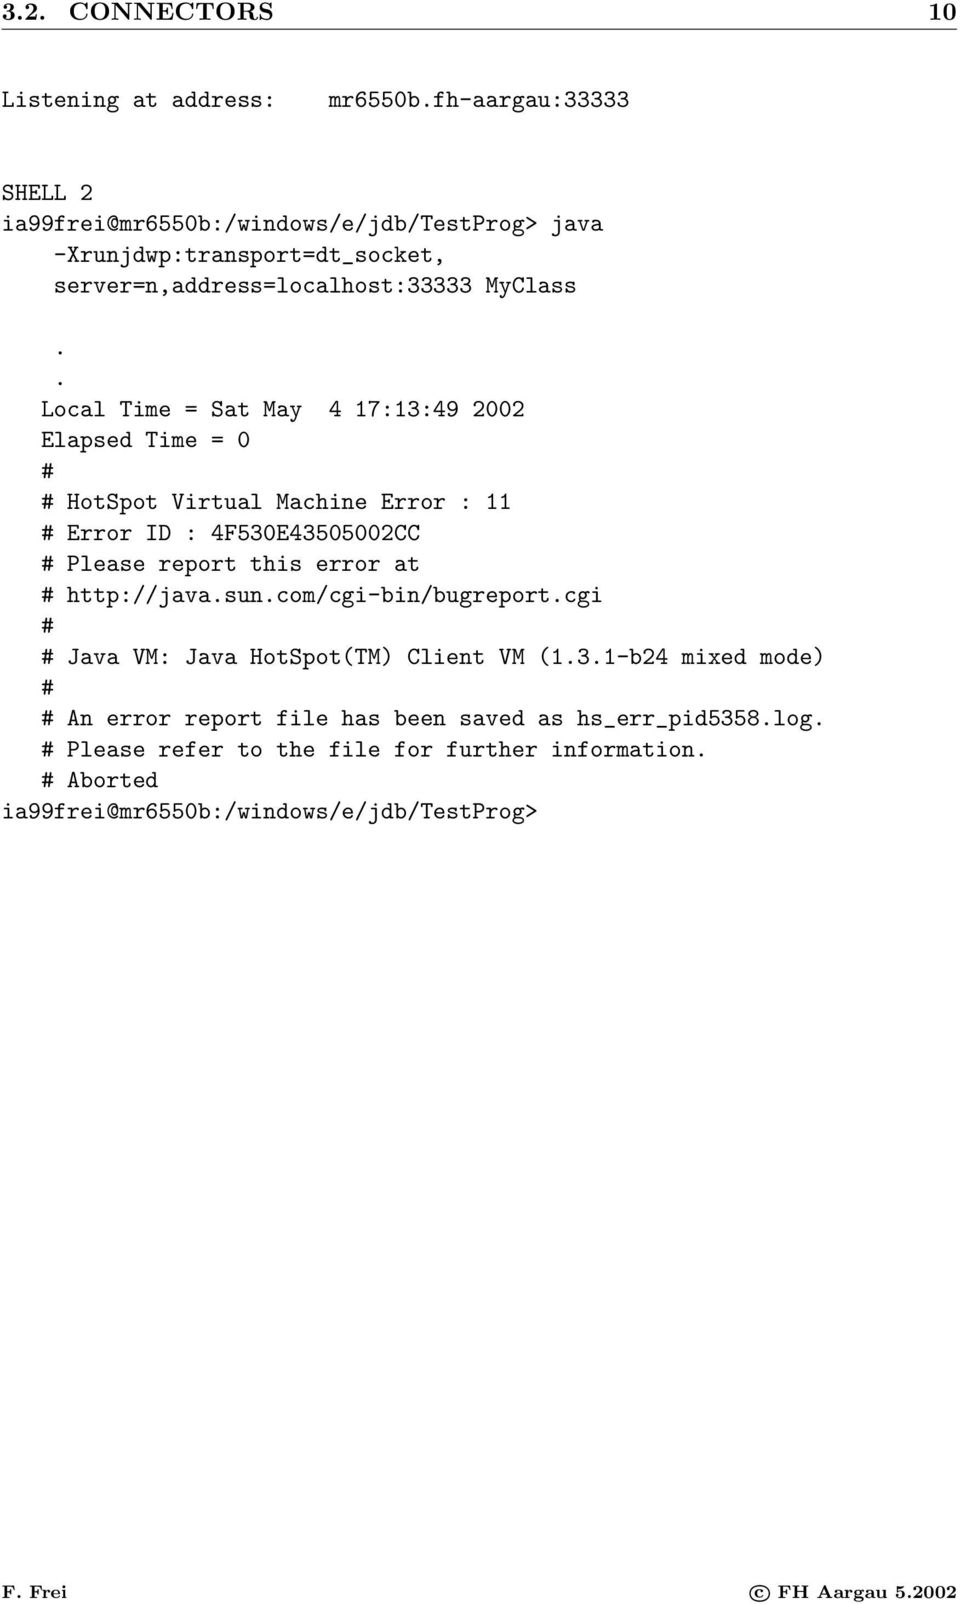 . Local Time = Sat May 4 17:13:49 2002 Elapsed Time = 0 # # HotSpot Virtual Machine Error : 11 # Error ID : 4F530E43505002CC # Please report this error at